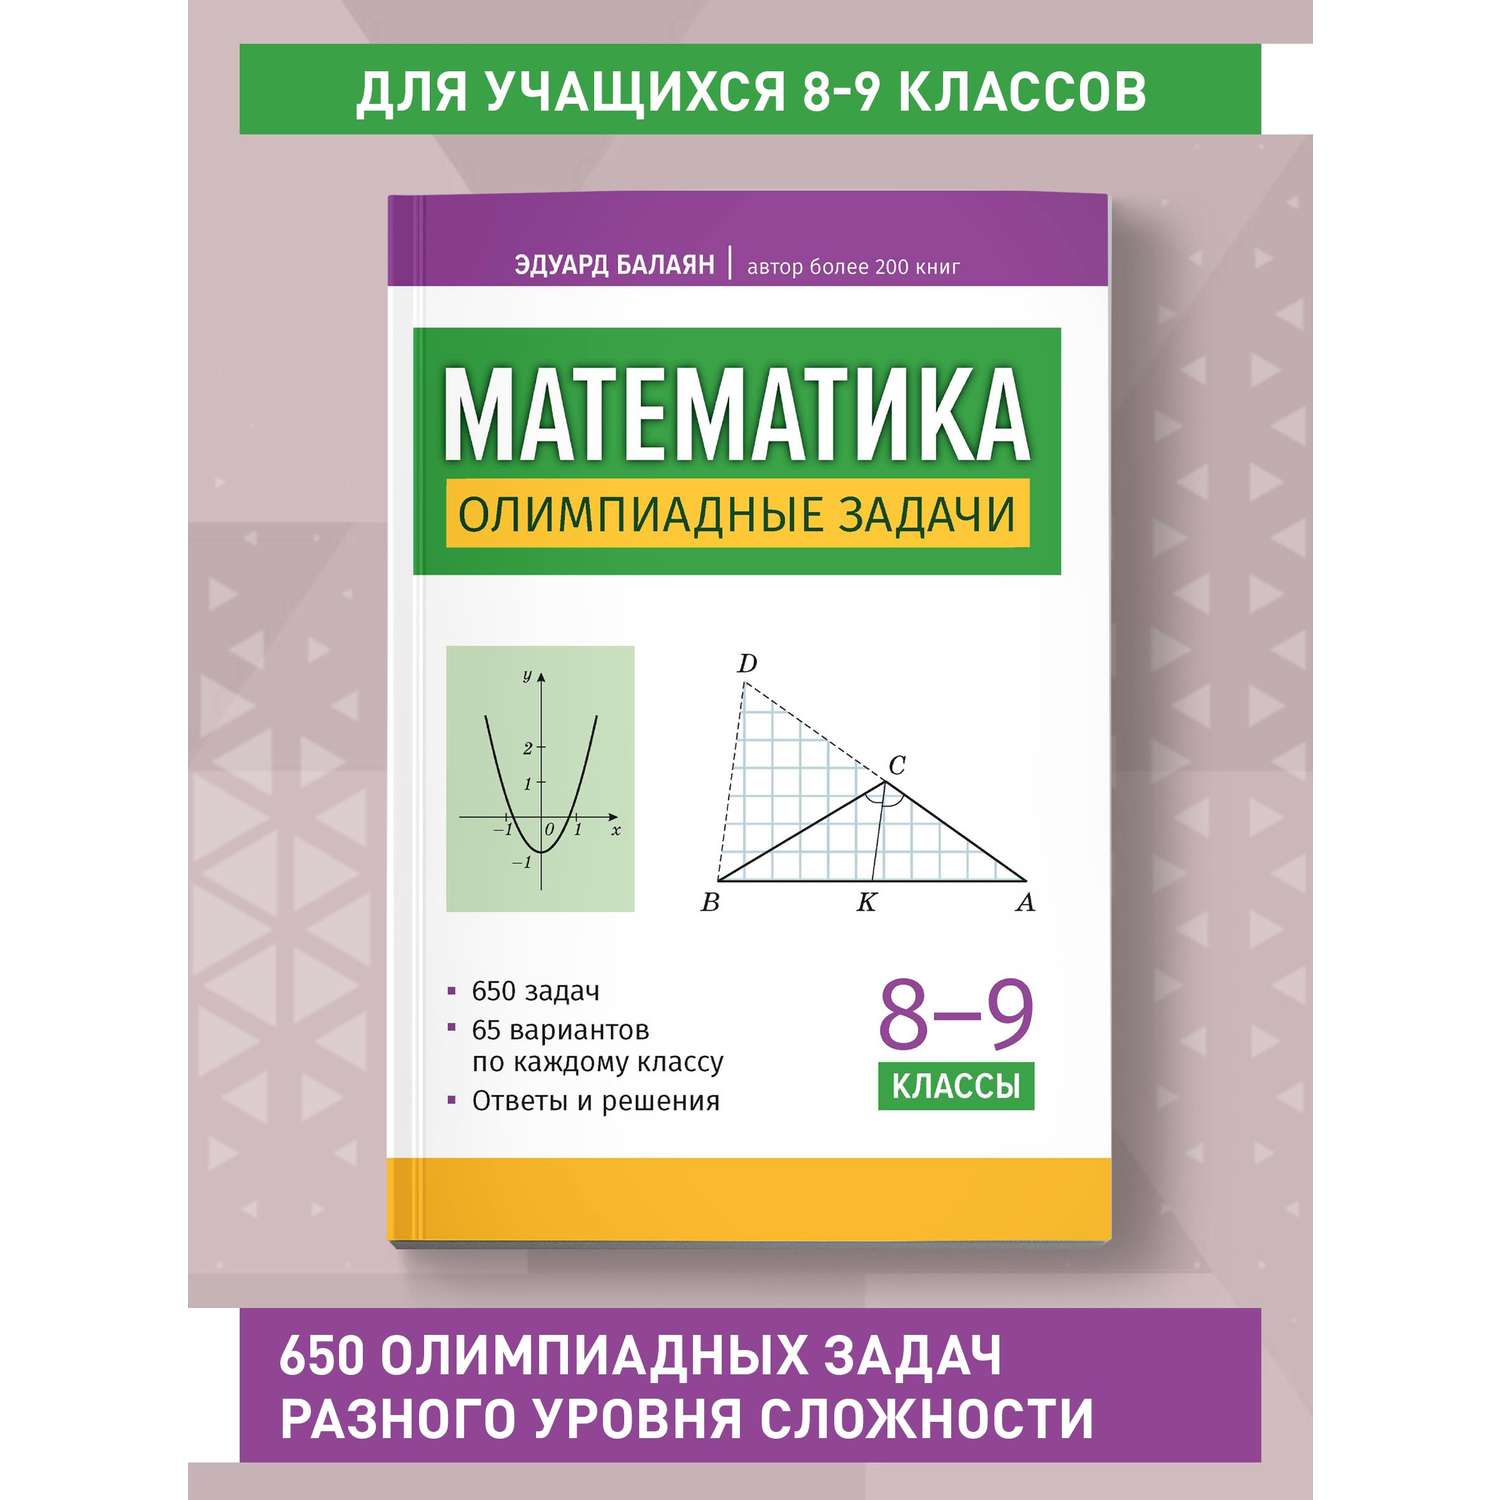 Книга ТД Феникс Математика олимпиадные задачи 8 9 классы - фото 2